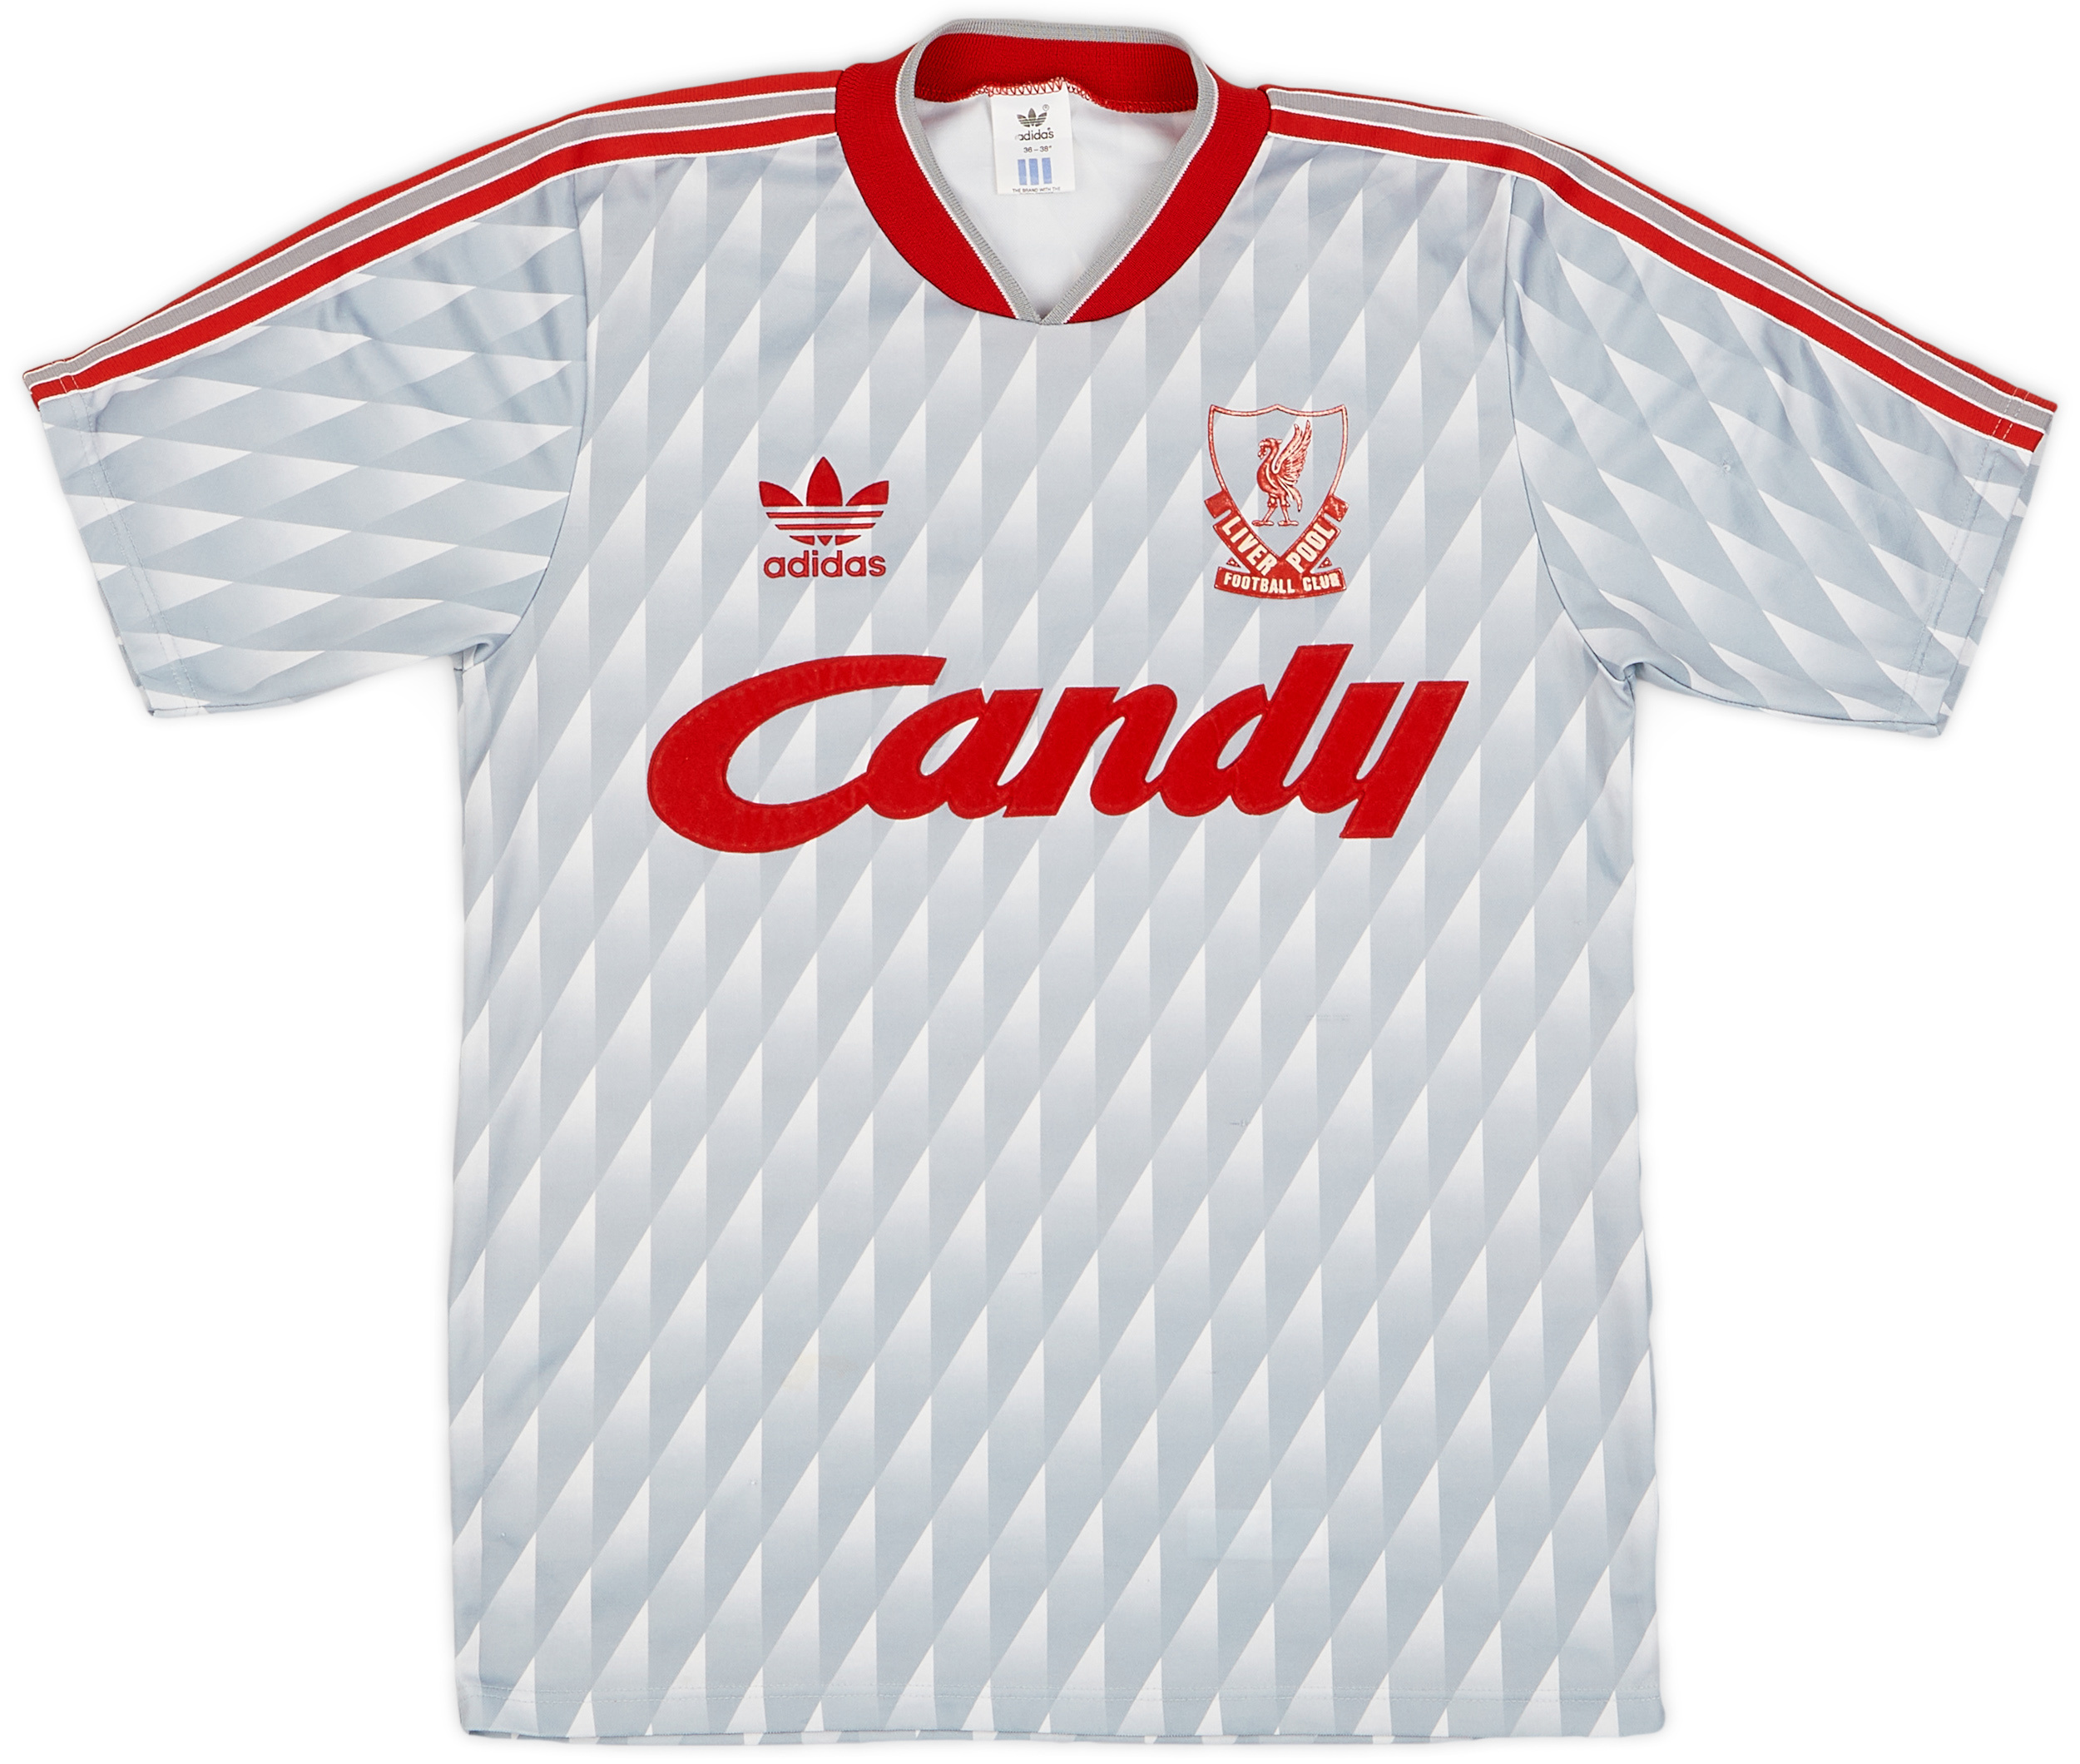 1989-91 Liverpool Away Shirt - 9/10 - ()